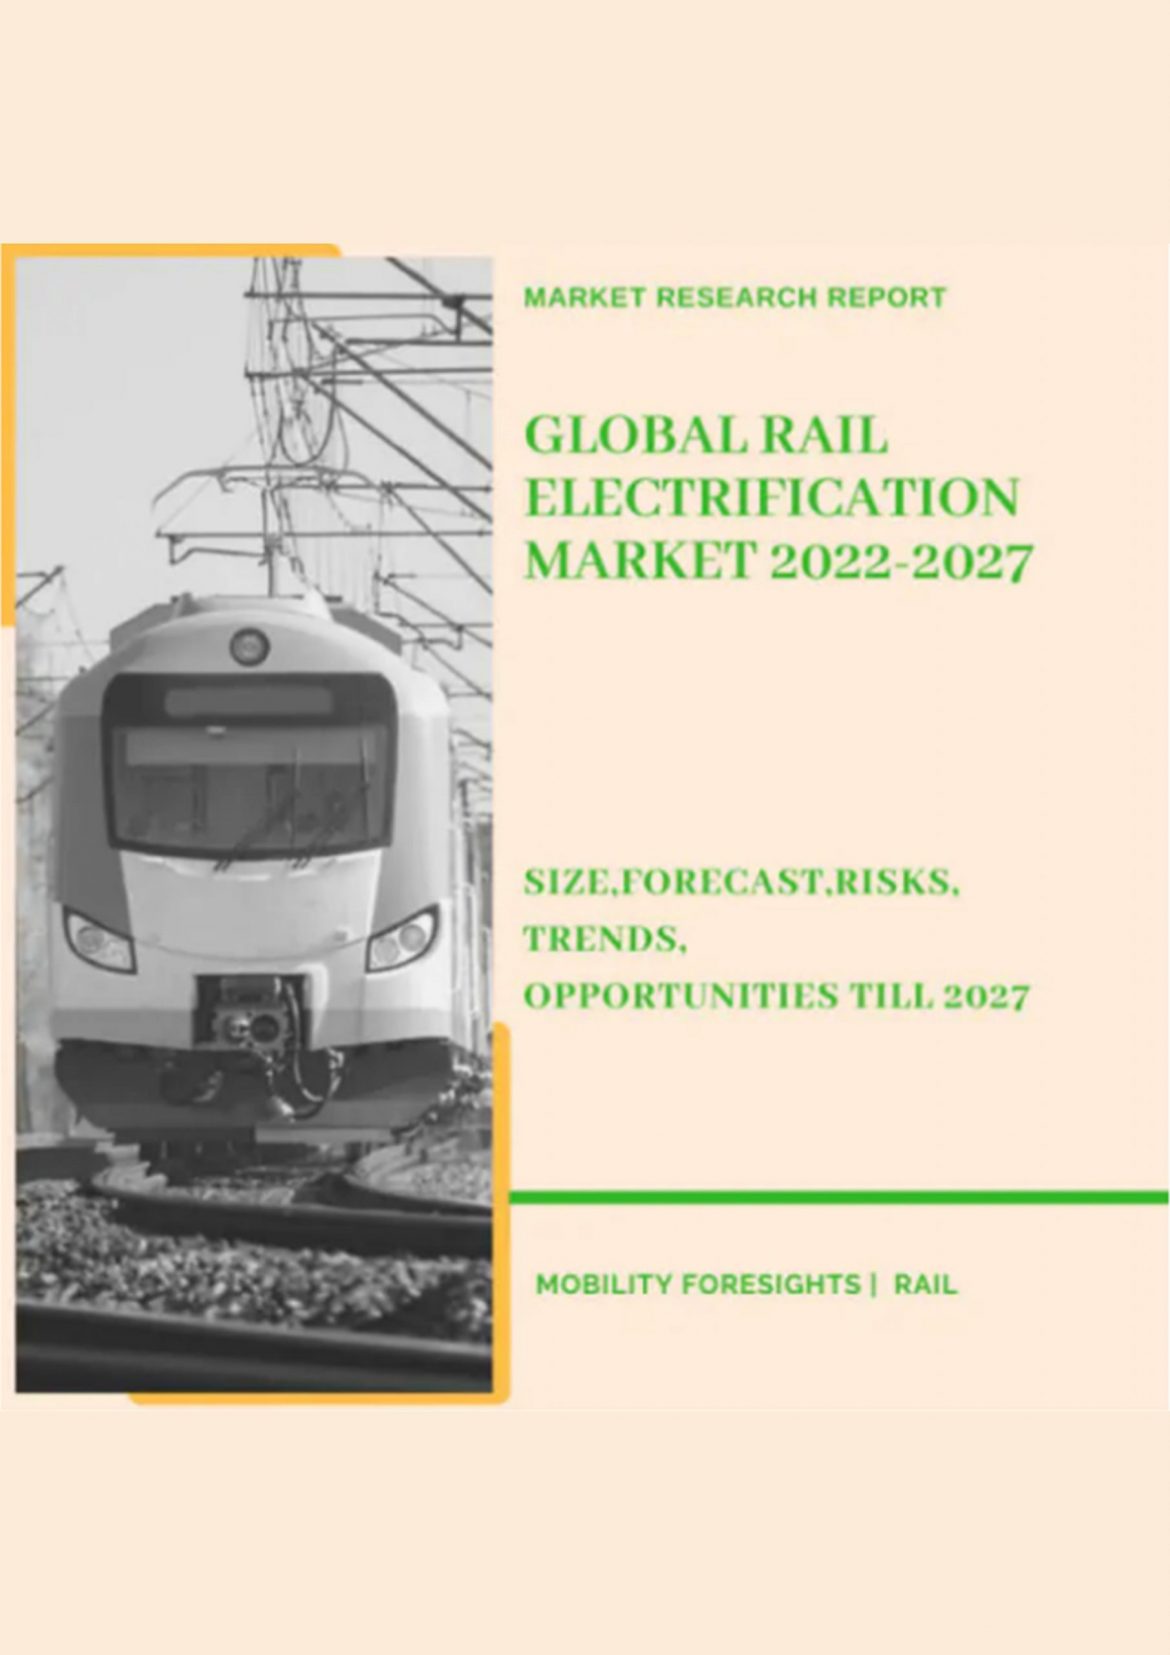 Global Rail Electrification Market 2022-2027